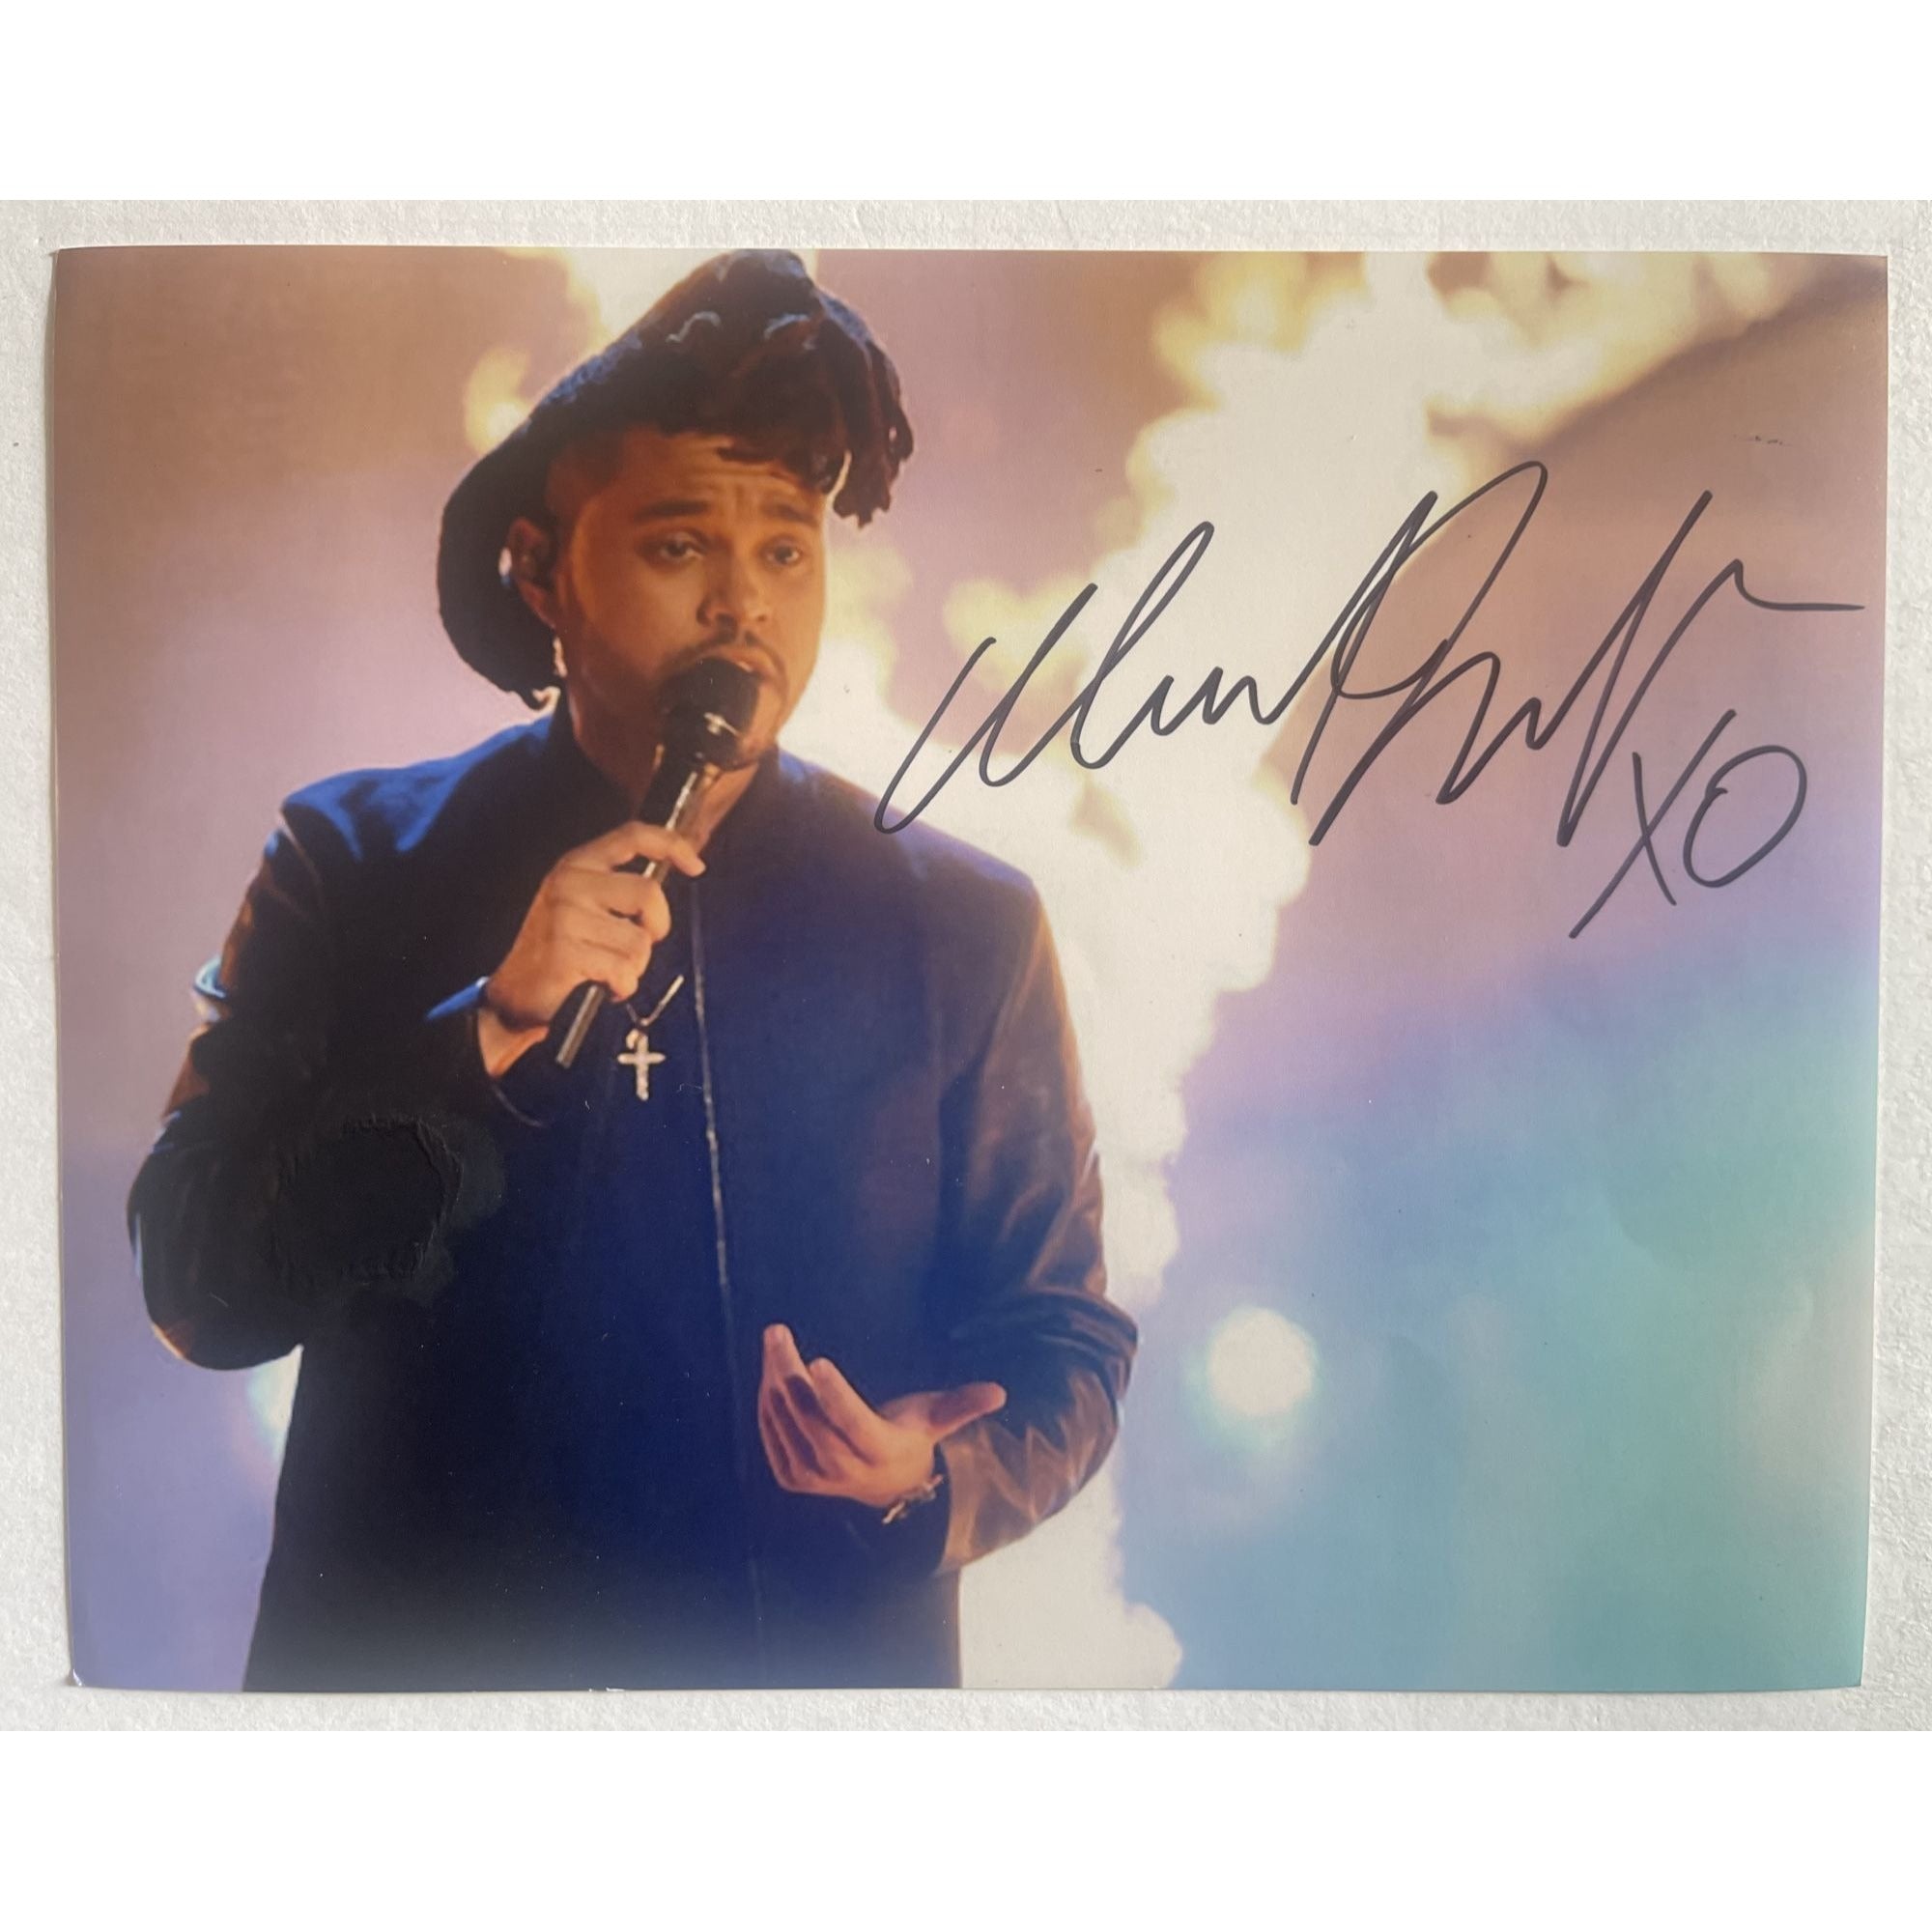 The Weeknd, Abel Makkonen Tesfaye 8 x 10 sign photo